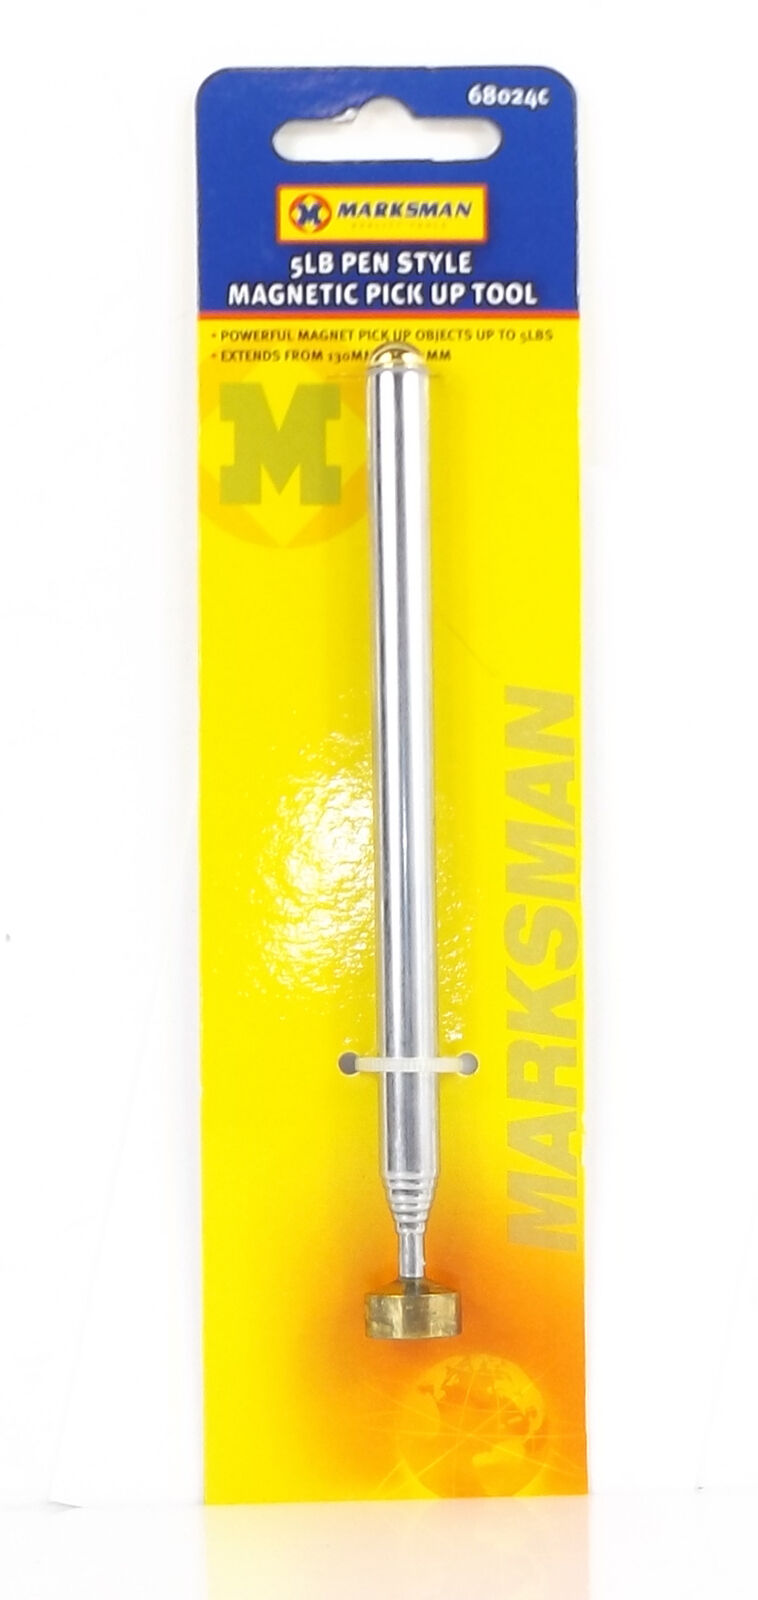 Marksman 68024C 5lb Pen Style Magnetic Pick Up